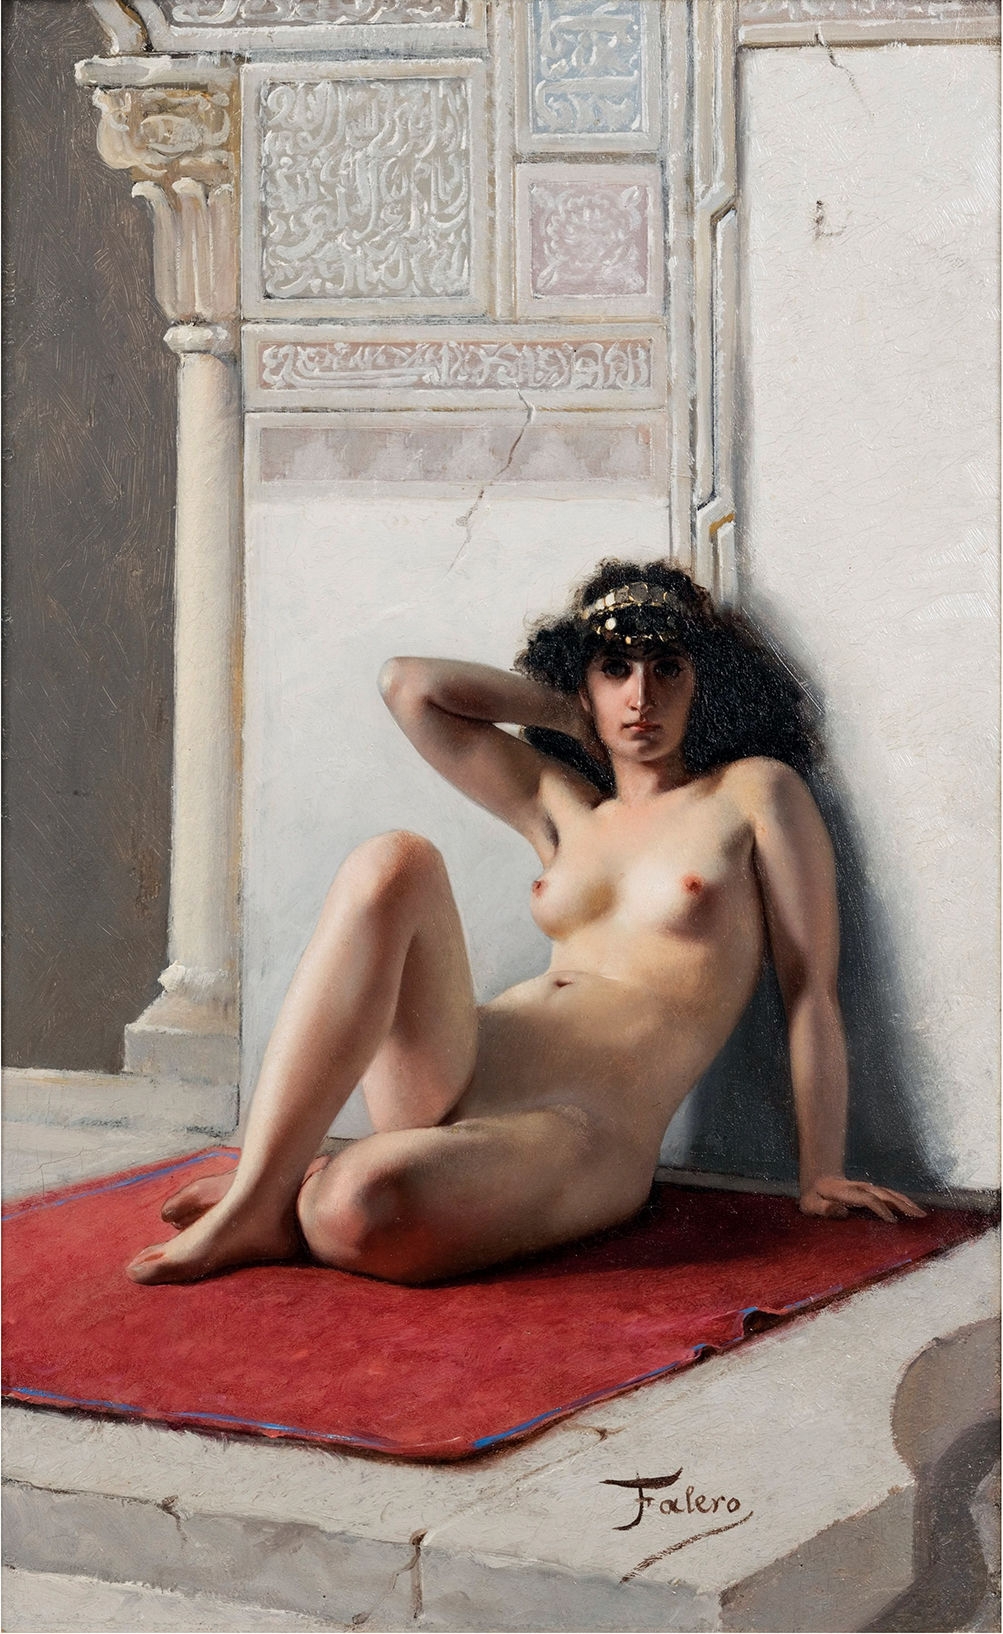 Erotic Art Collector 0319 LUIS RICARDO FALERO 1851-1896 14